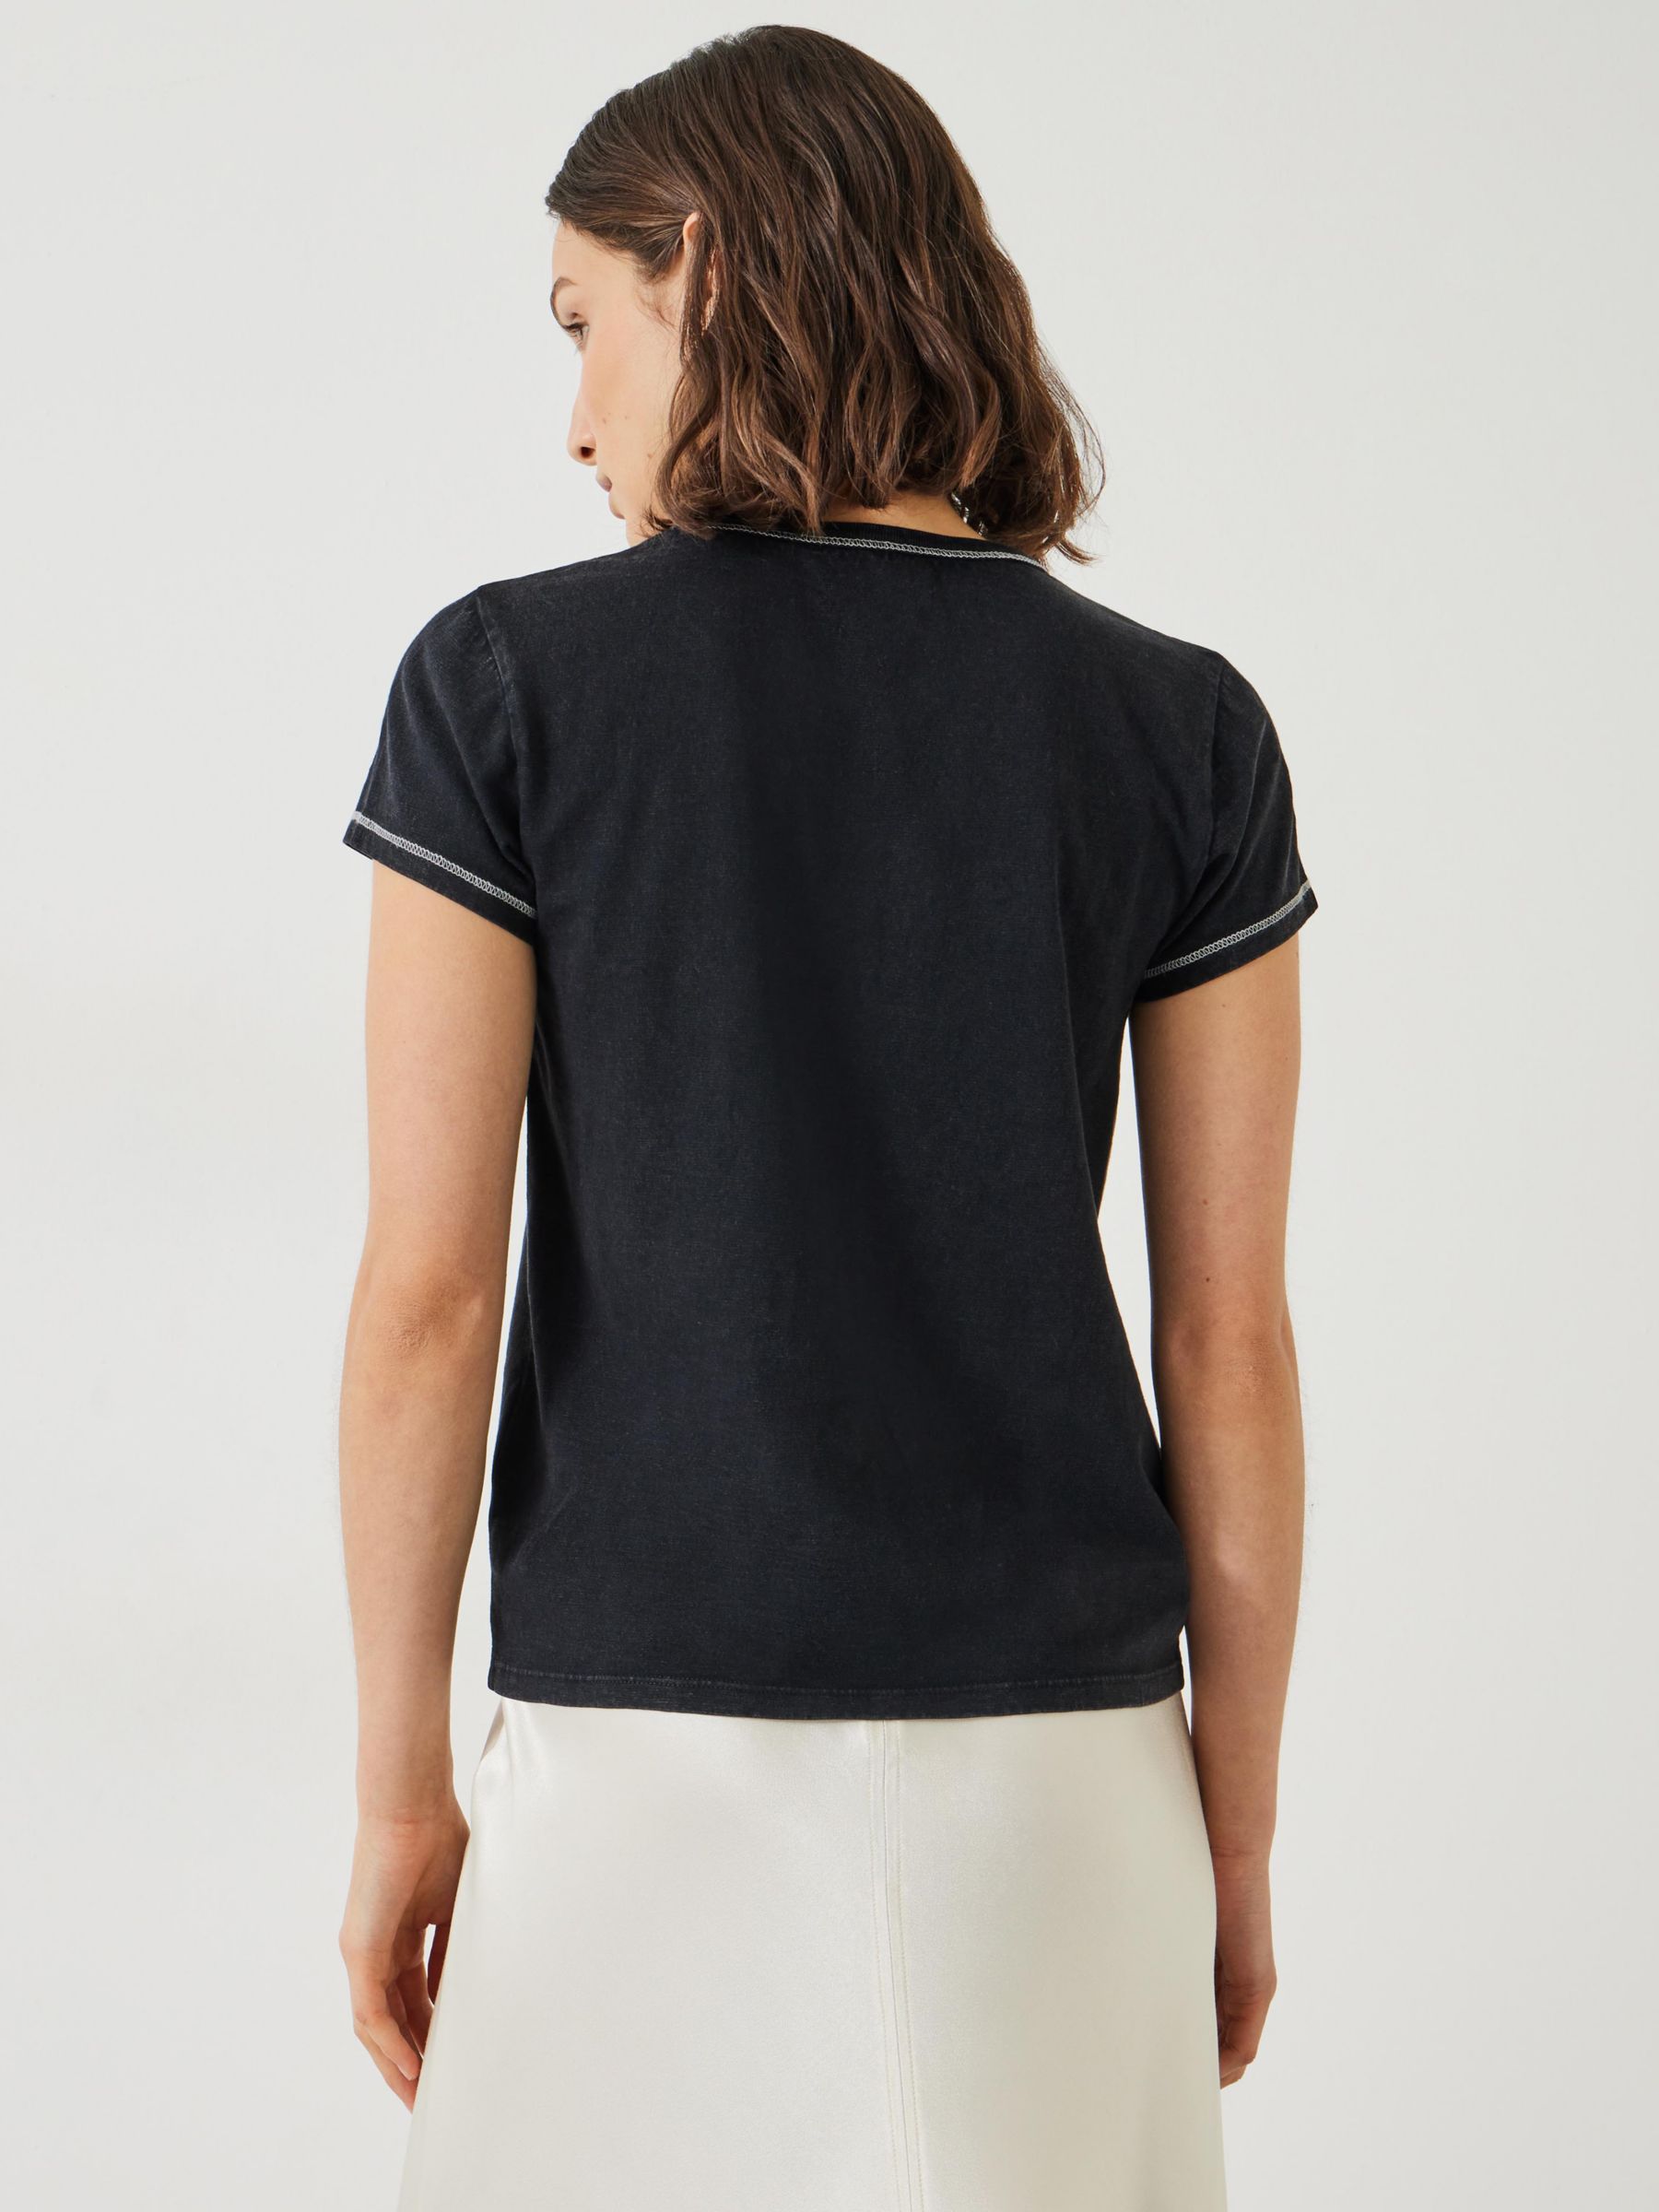 HUSH Danika Stitch Detail T-Shirt, Black Onyx, L